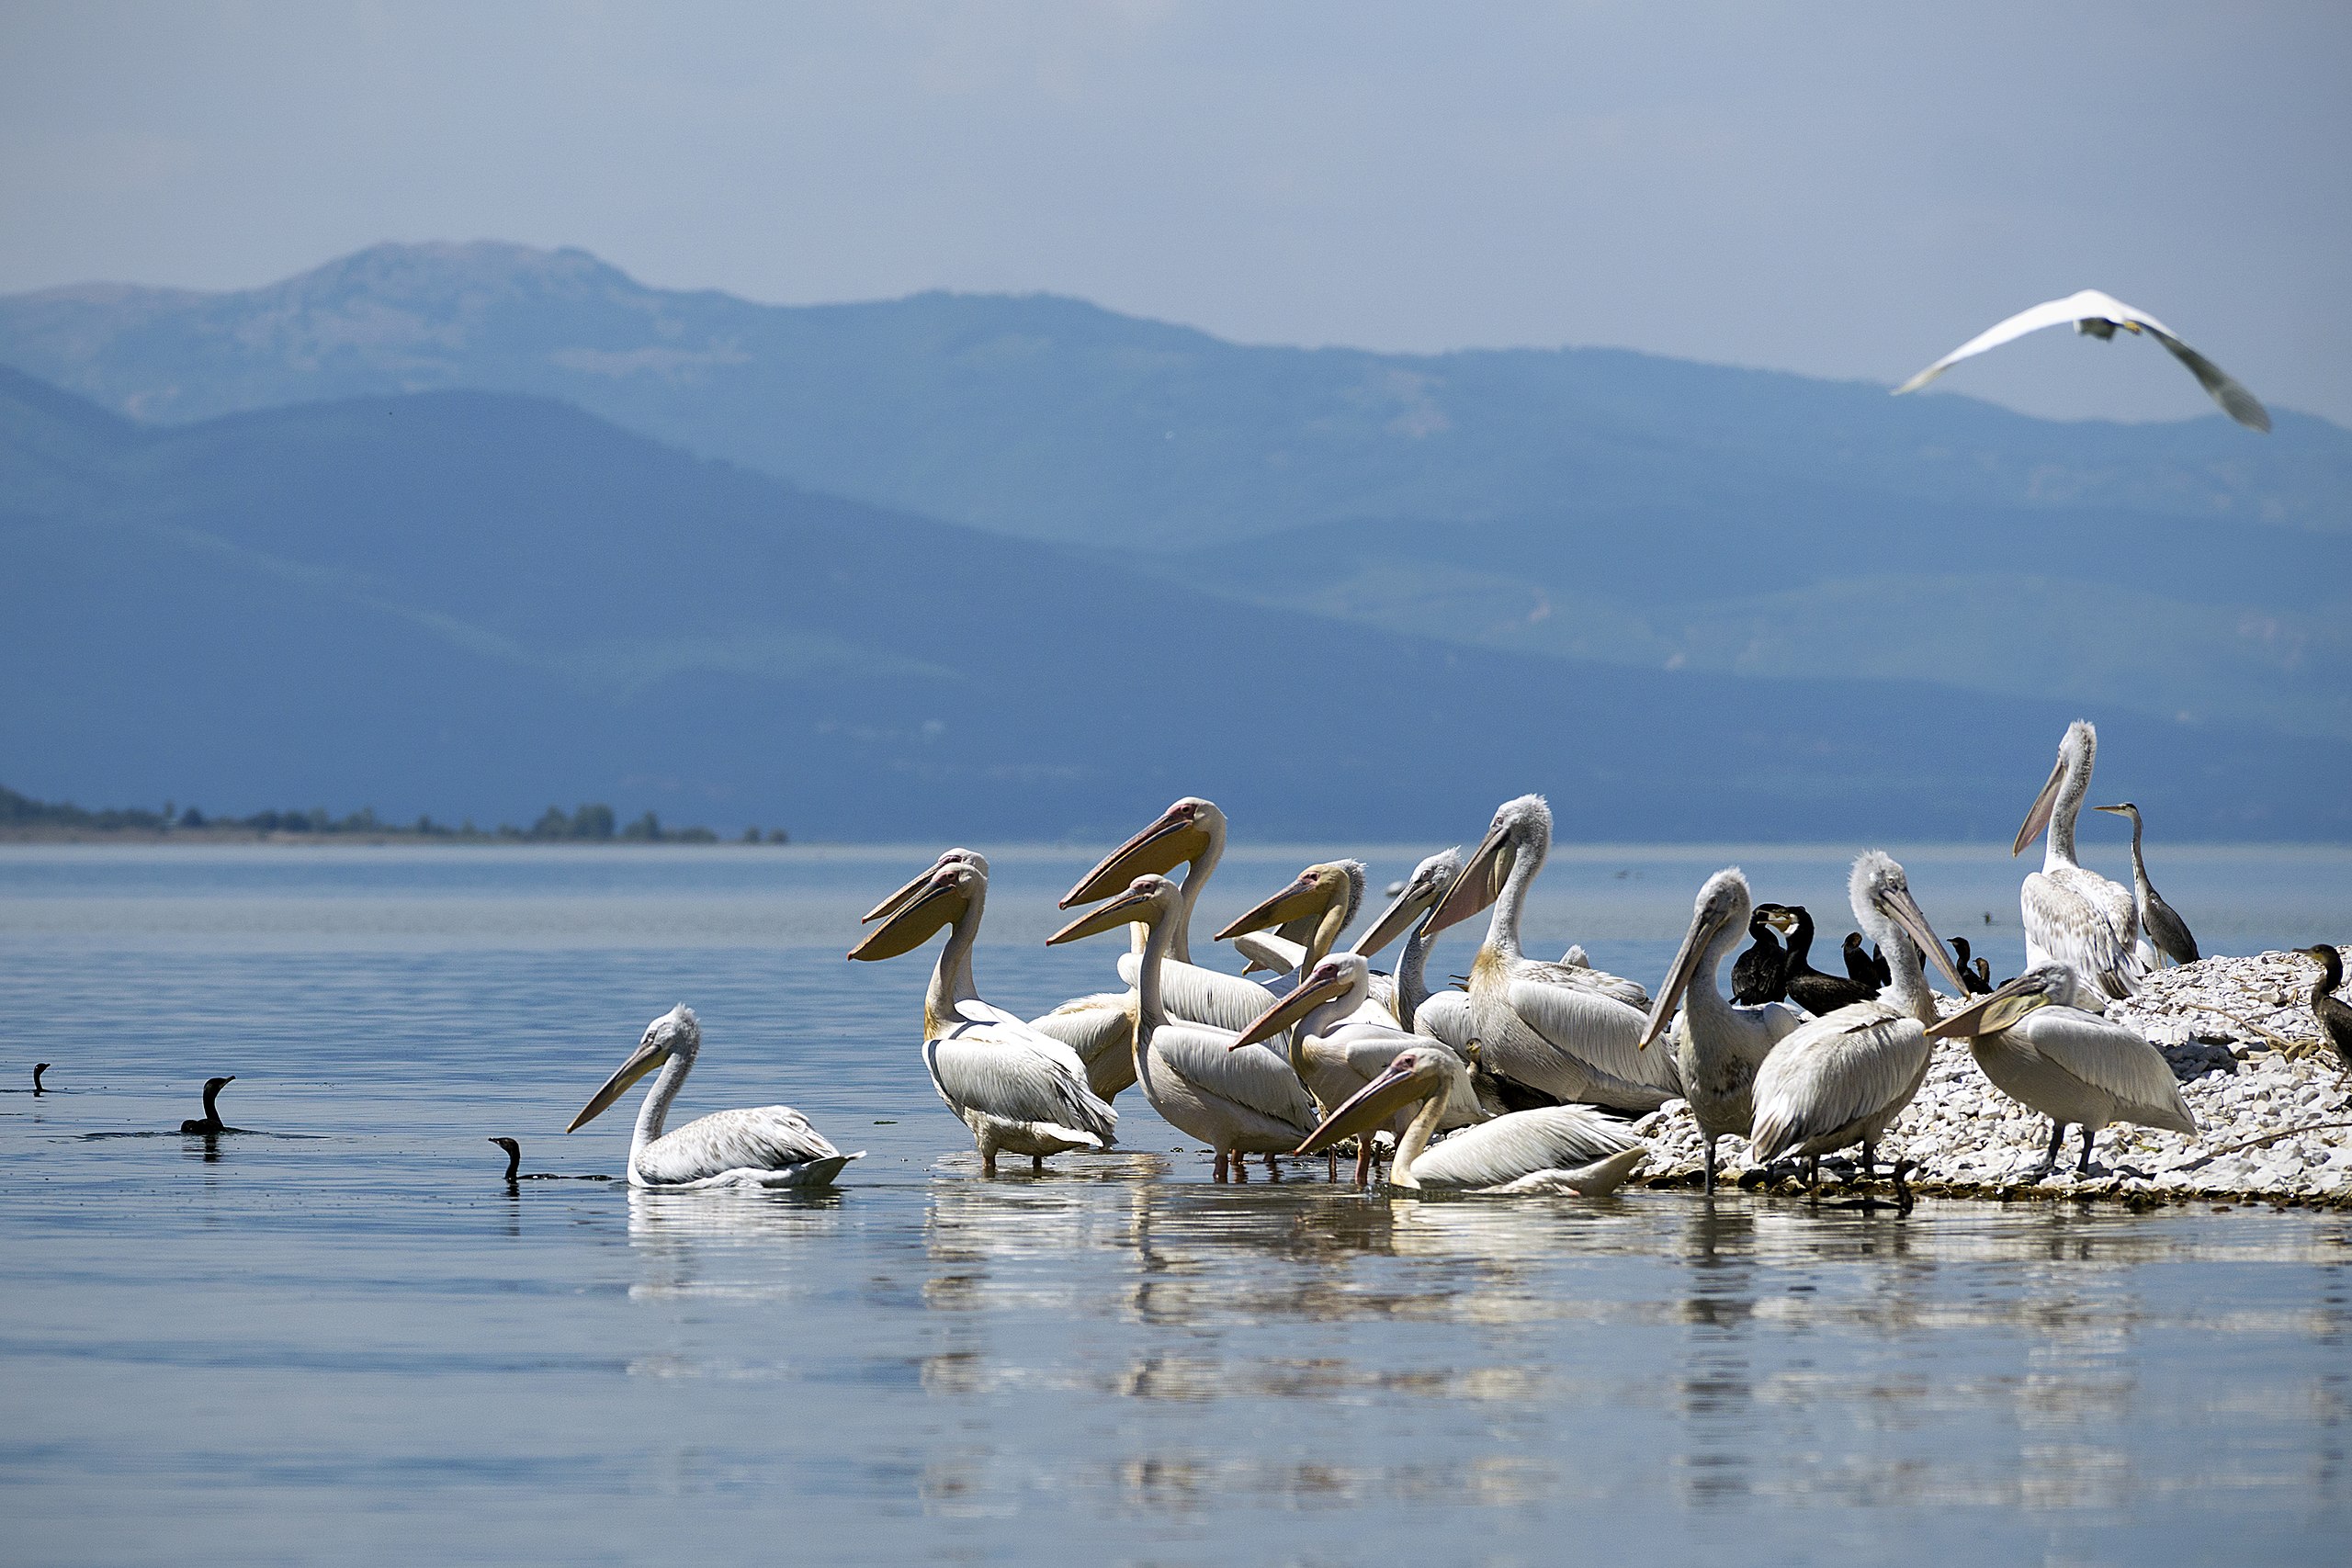 EAD, Wetlands International launch a new online portal for world’s waterbird populations